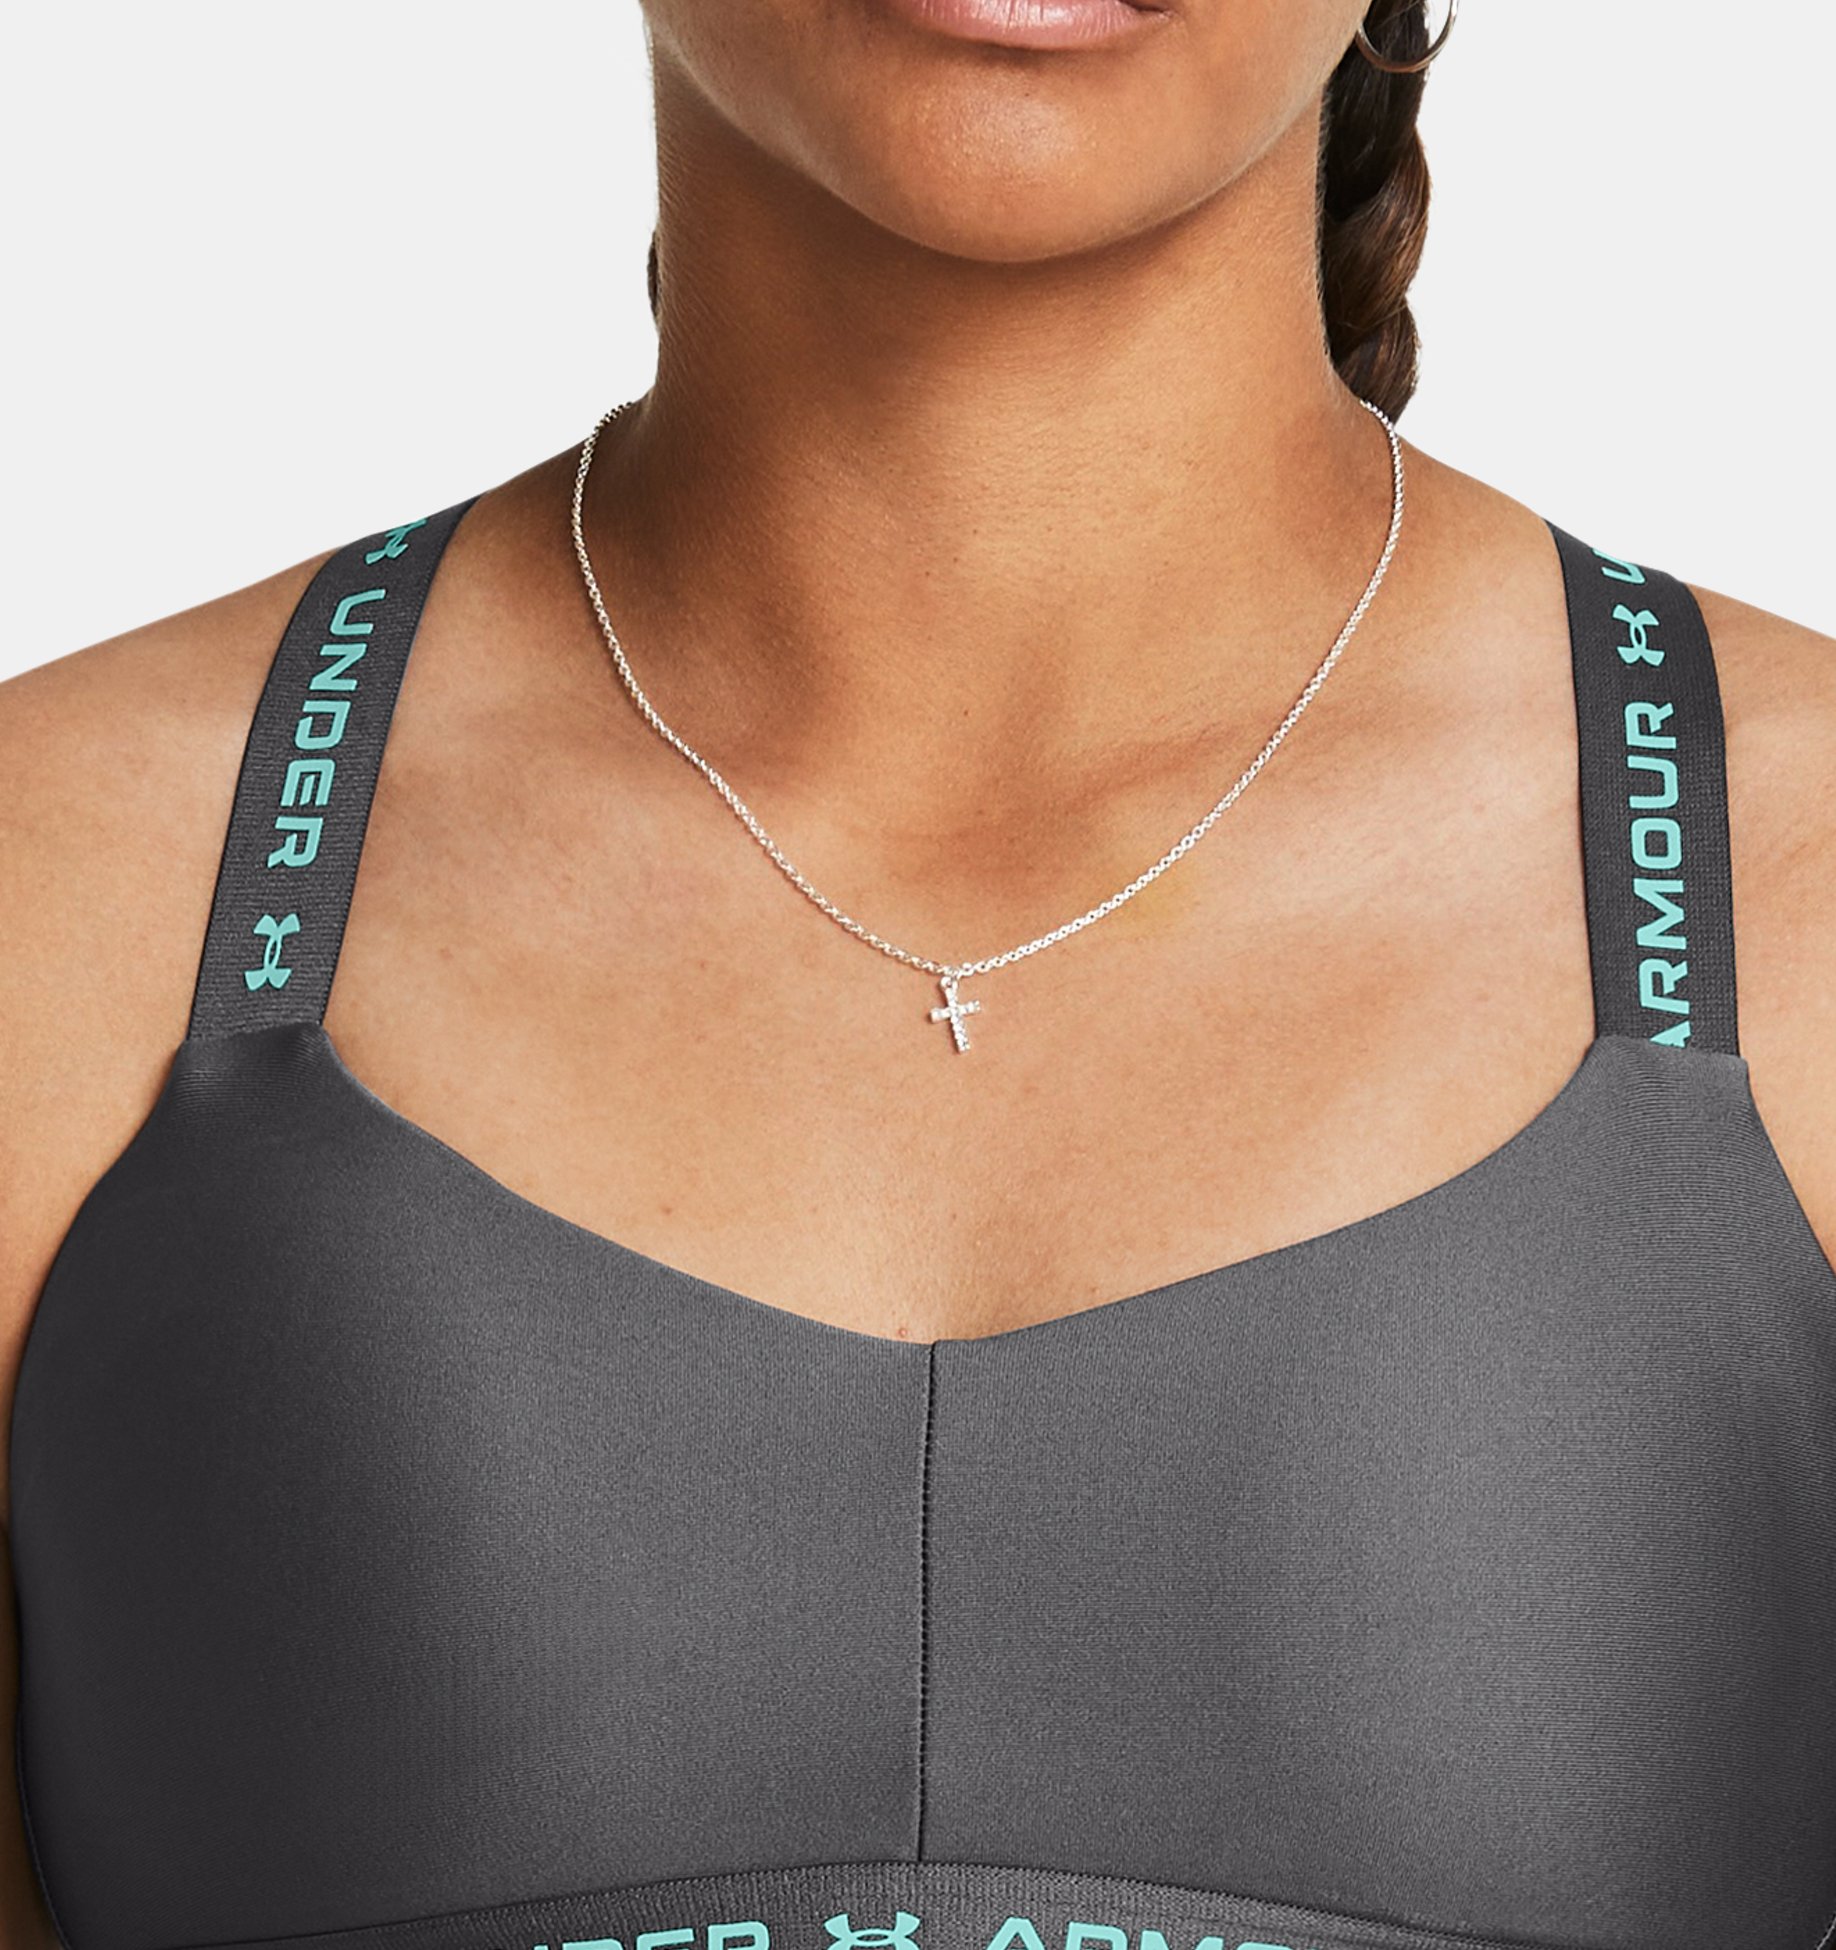  G Crossback Mid Printed, Black - sports bra - UNDER ARMOUR  - 19.90 € - outdoorové oblečení a vybavení shop